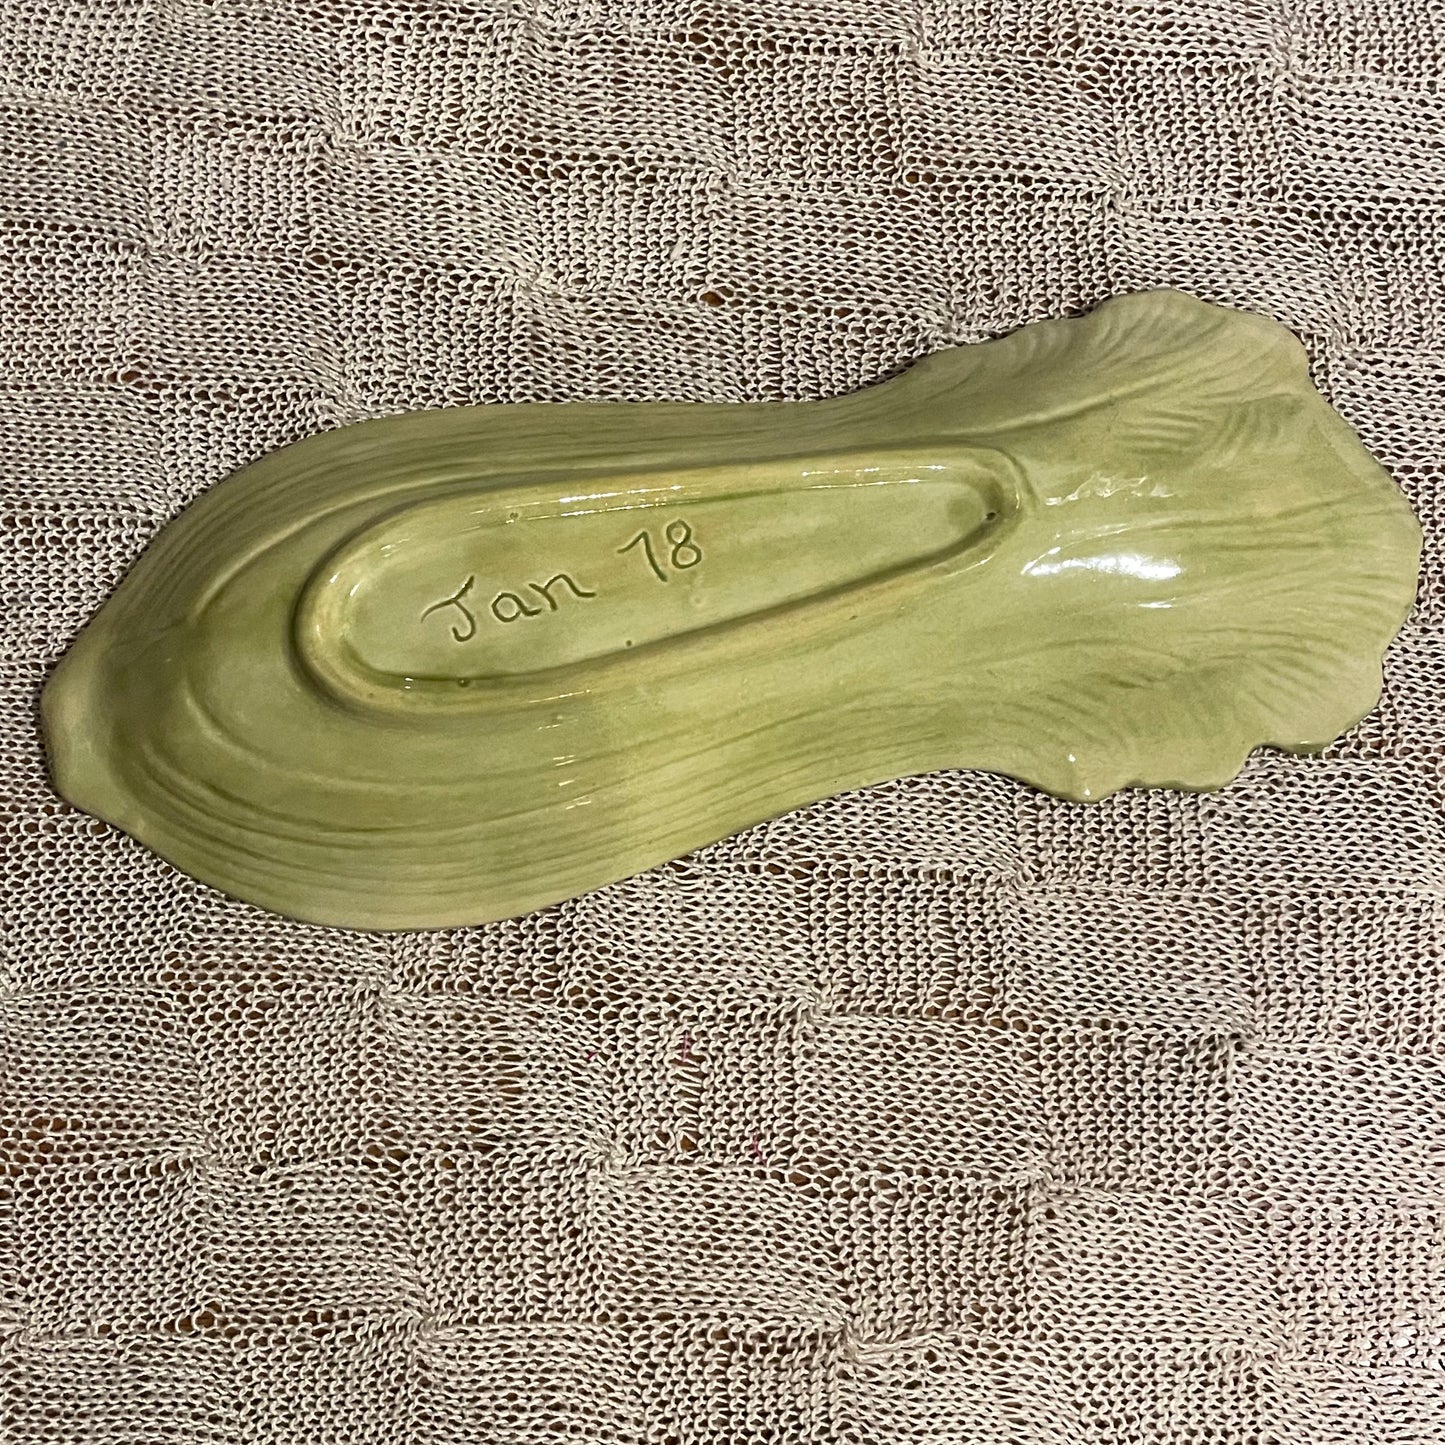 1978 Handmade Ceramic Celery Dish